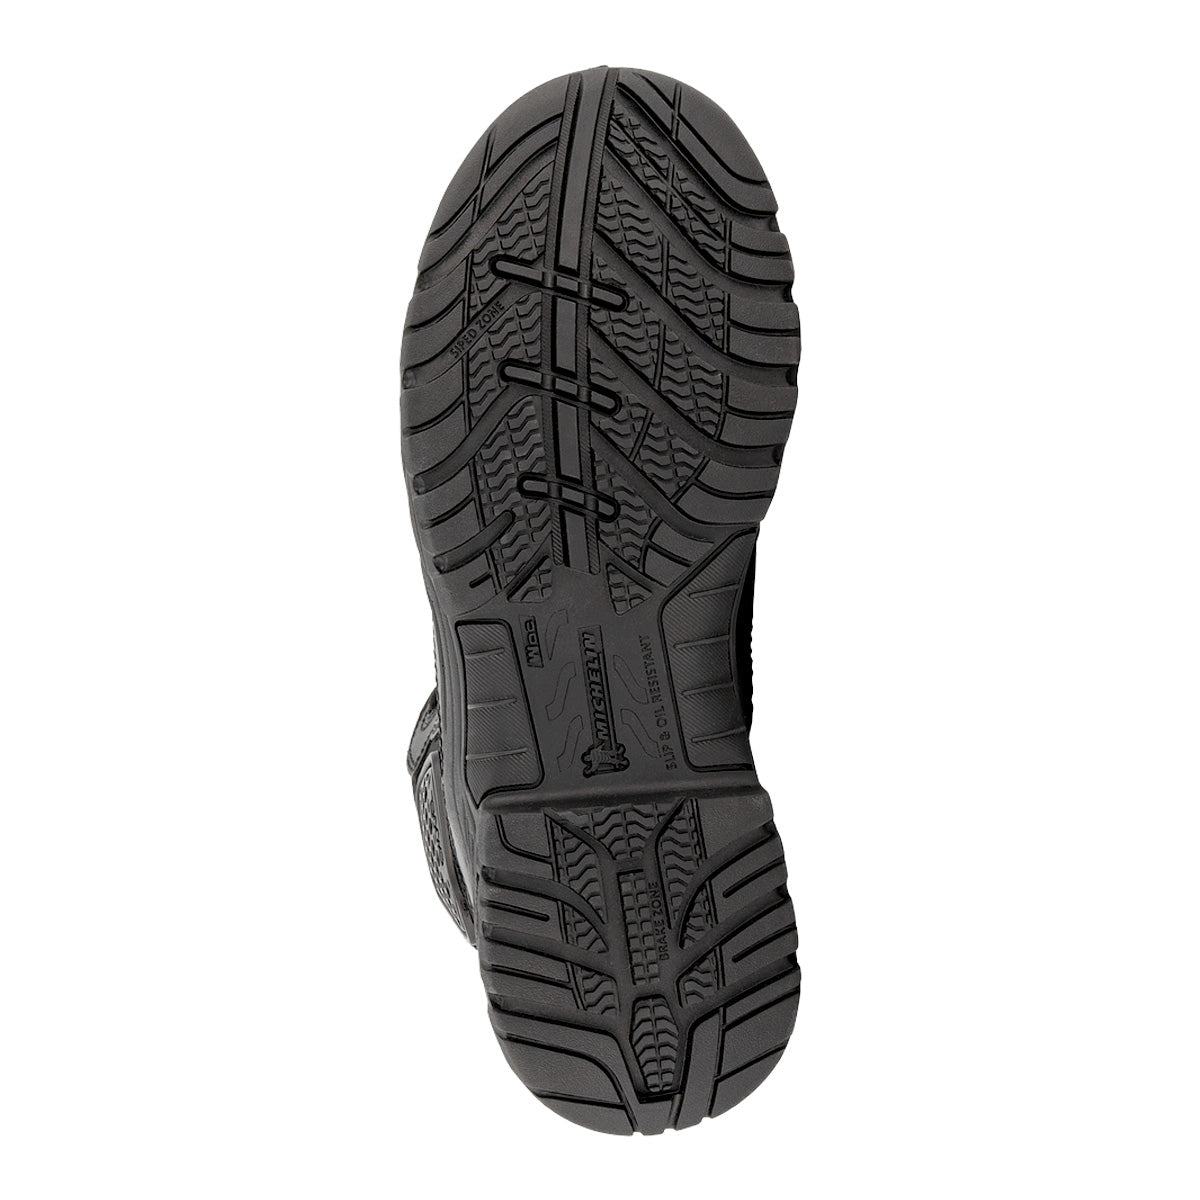 Magnum Strike Force 6.0 Side-Zip Composite Toe Boot Black Tactical Distributors Ltd New Zealand